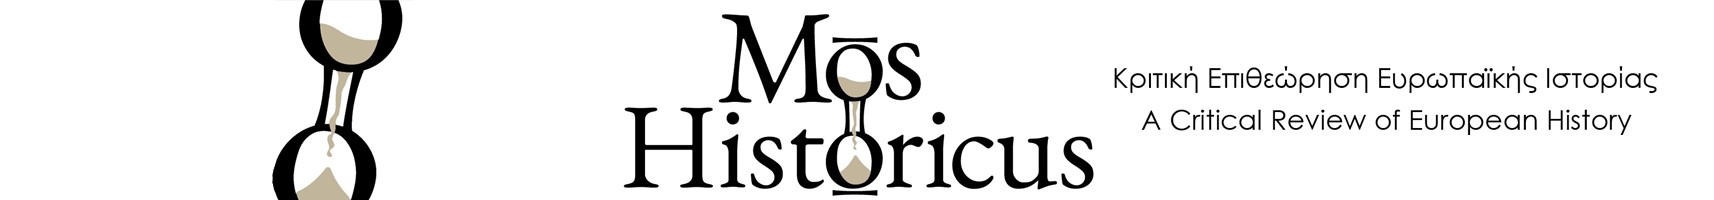 Mos Historicus: A Critical Review of European History